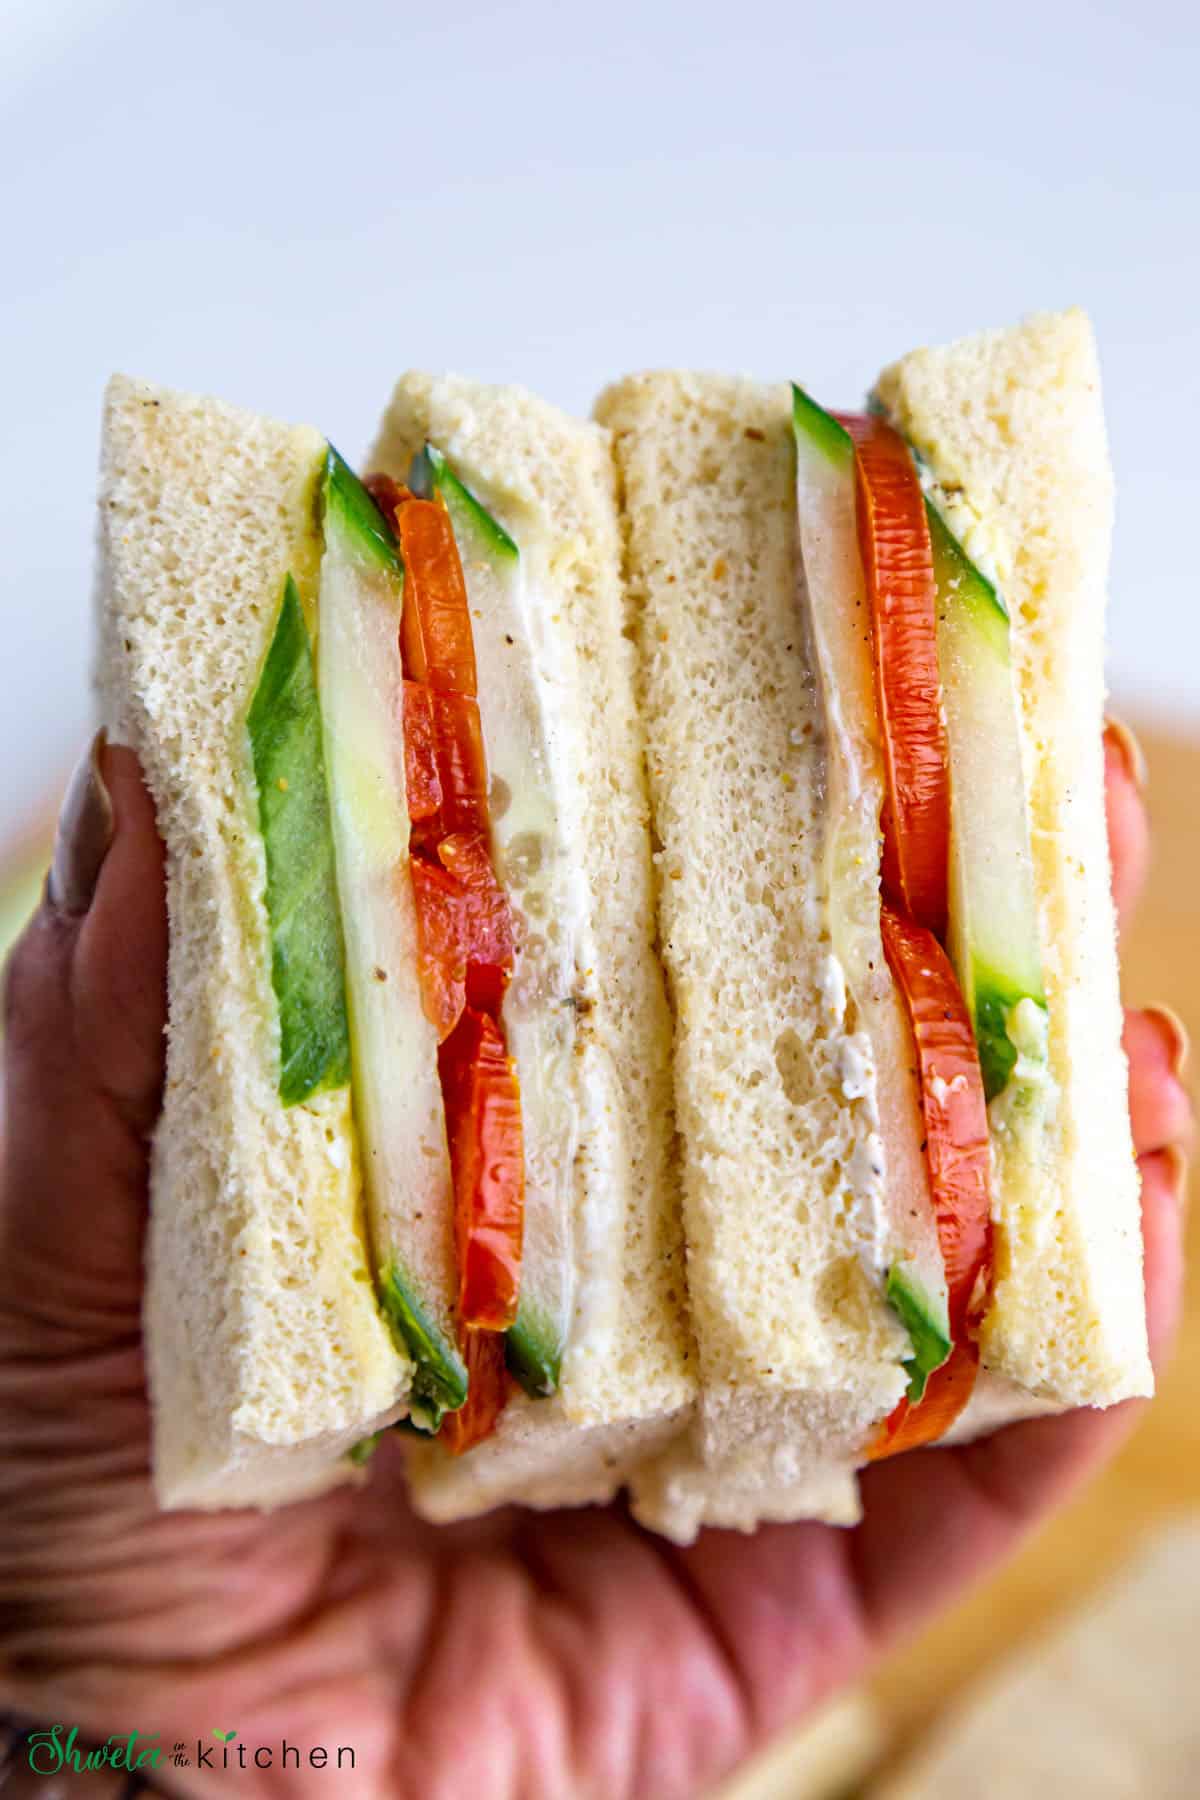 Half cut tomato cucumber sandwich held in hand showing the inside of sandwich